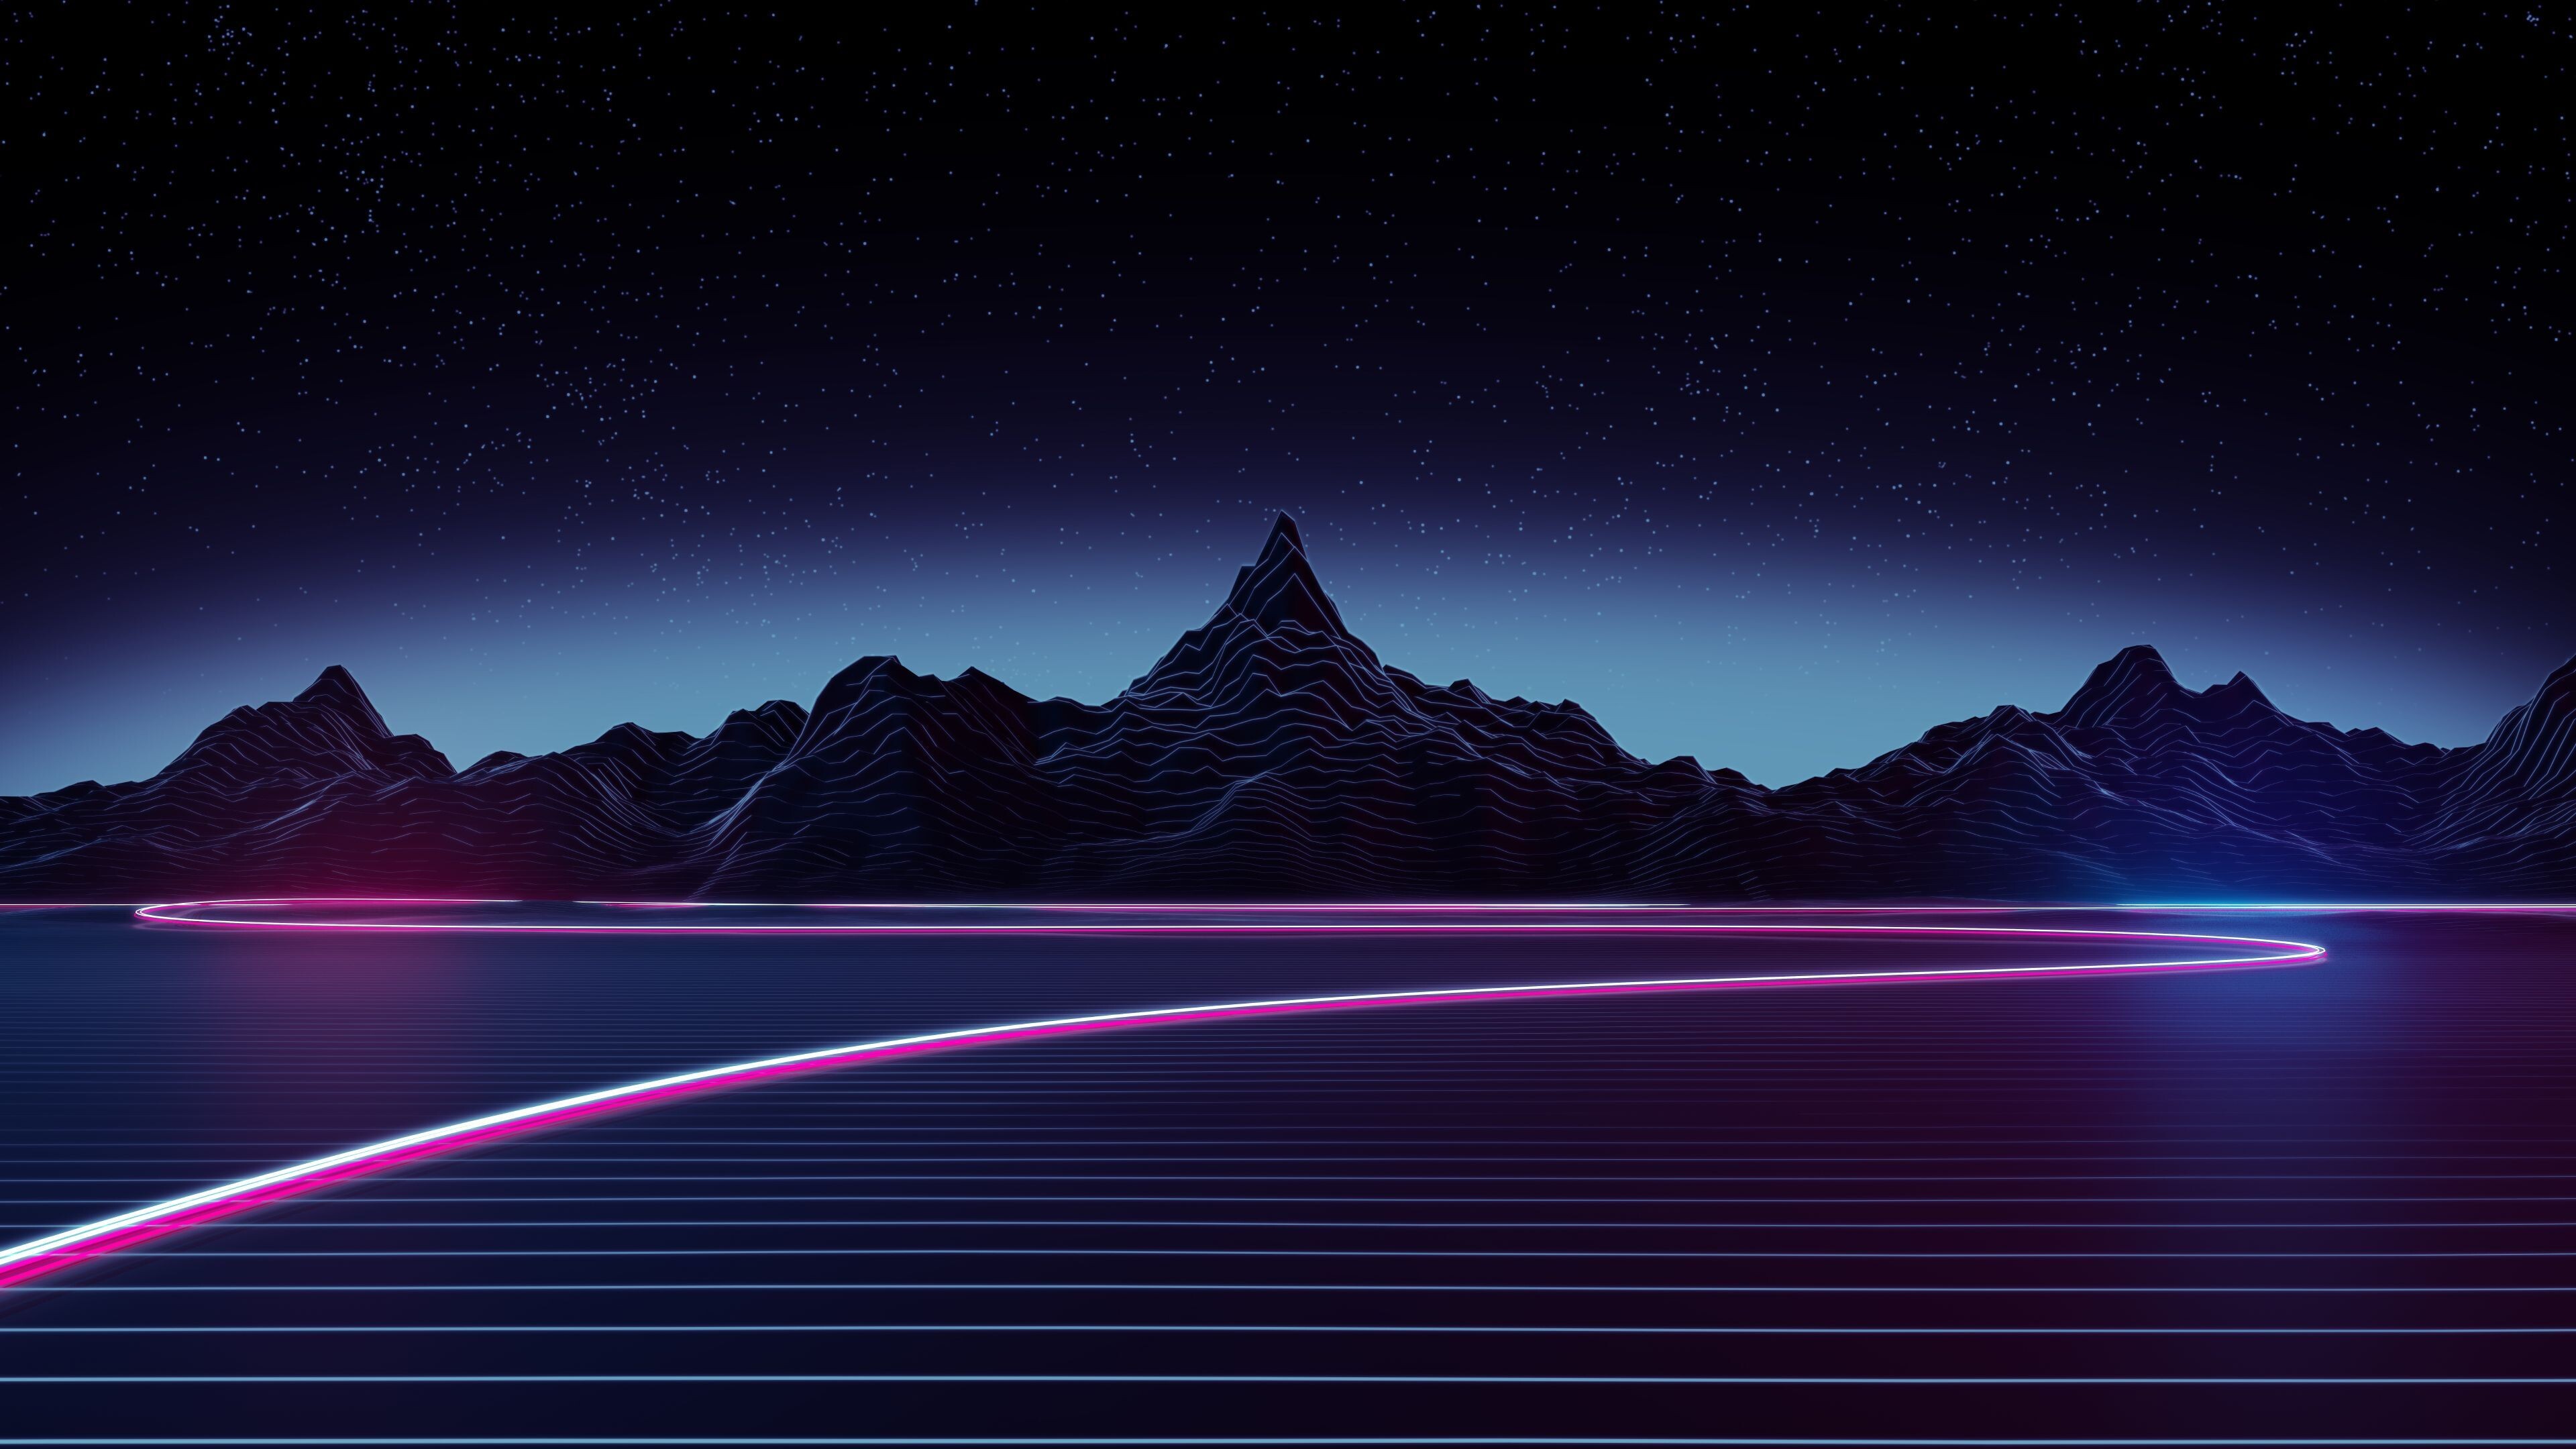 Glow in the Dark: Mountainous landforms, Neon glowing lines, Surreal landscape, Cosmic. 3840x2160 4K Background.